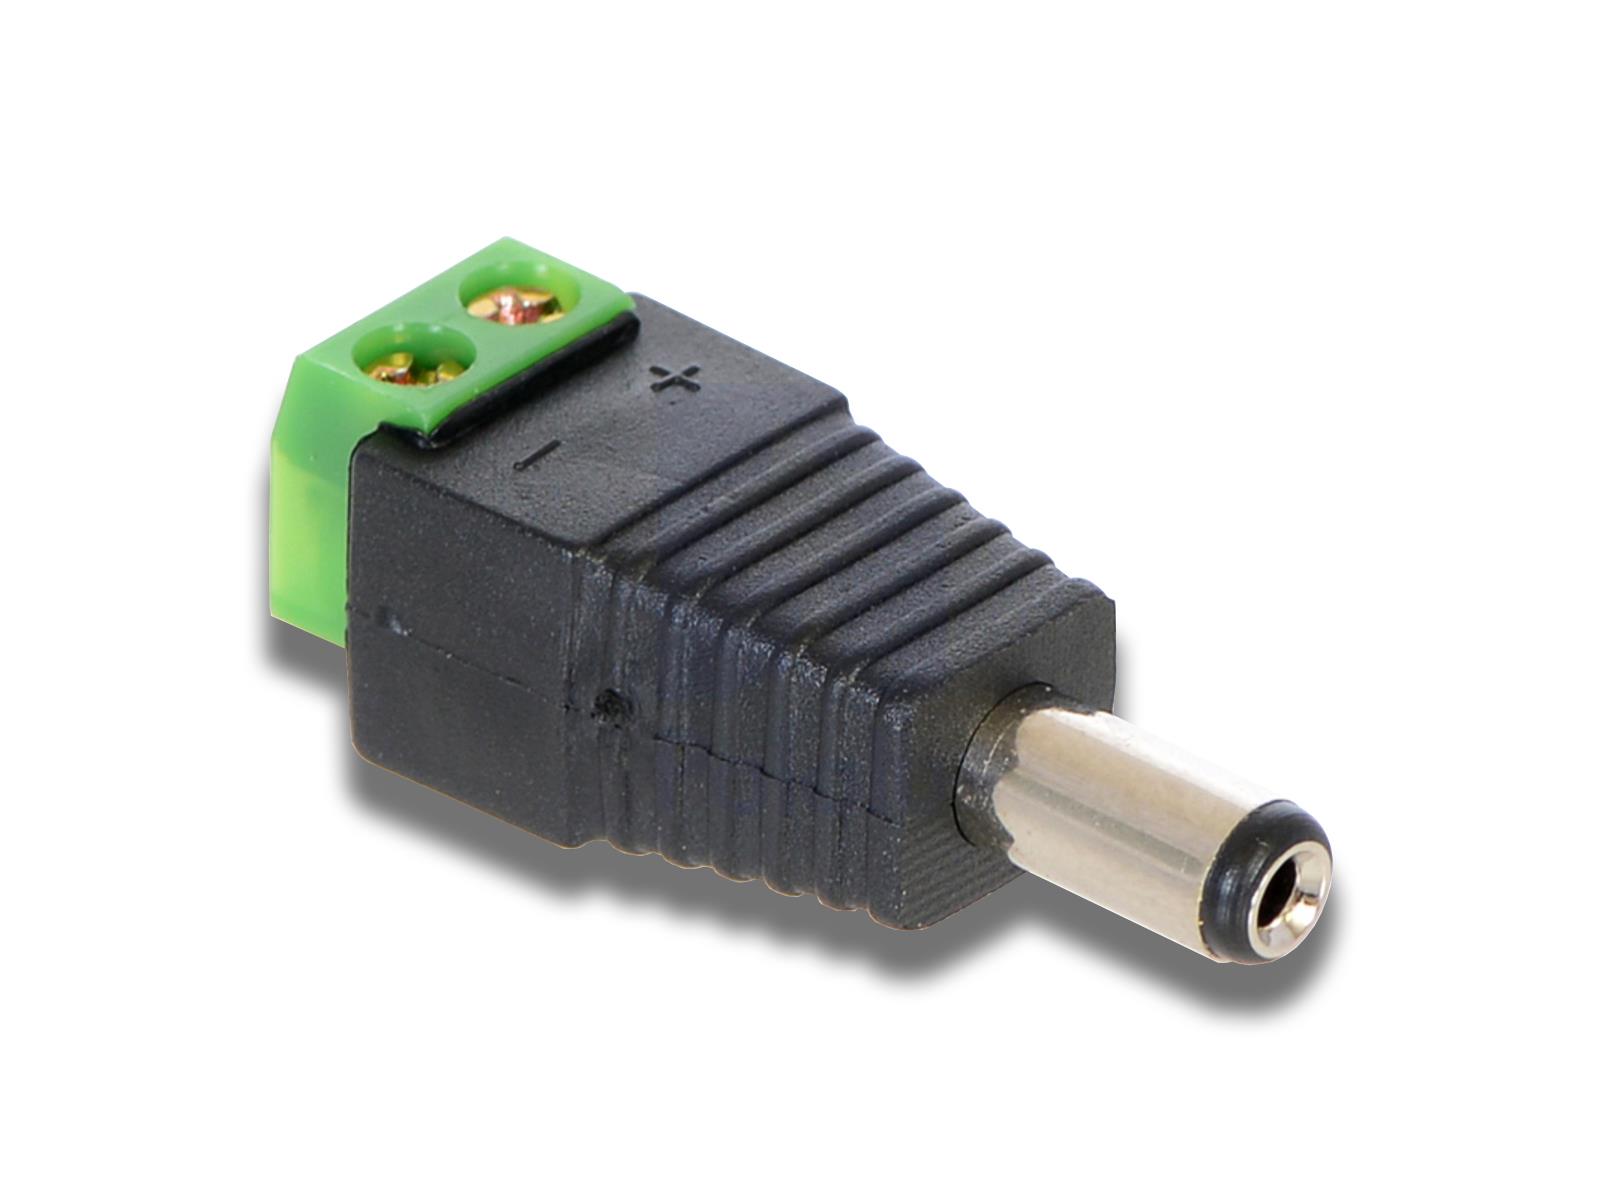 Male DC 5.5 x 2.1mm Plug to Screw Terminal Block Adapter